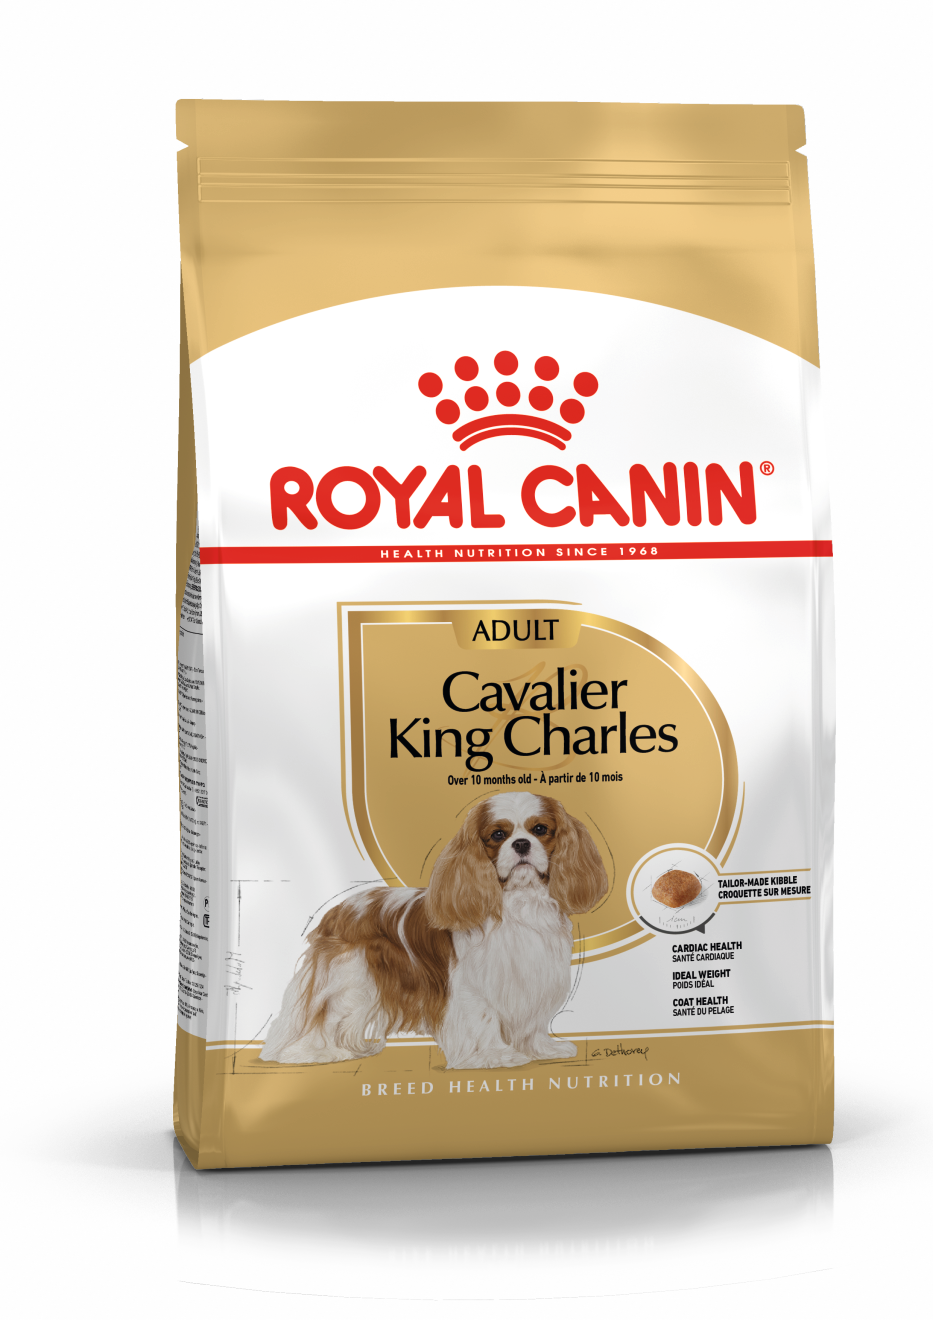 Royal Canin Cavalier King Charles Adult - Aliment pour chien Cavalier King Charles adulte - À partir de 10 mois - 1,5kg